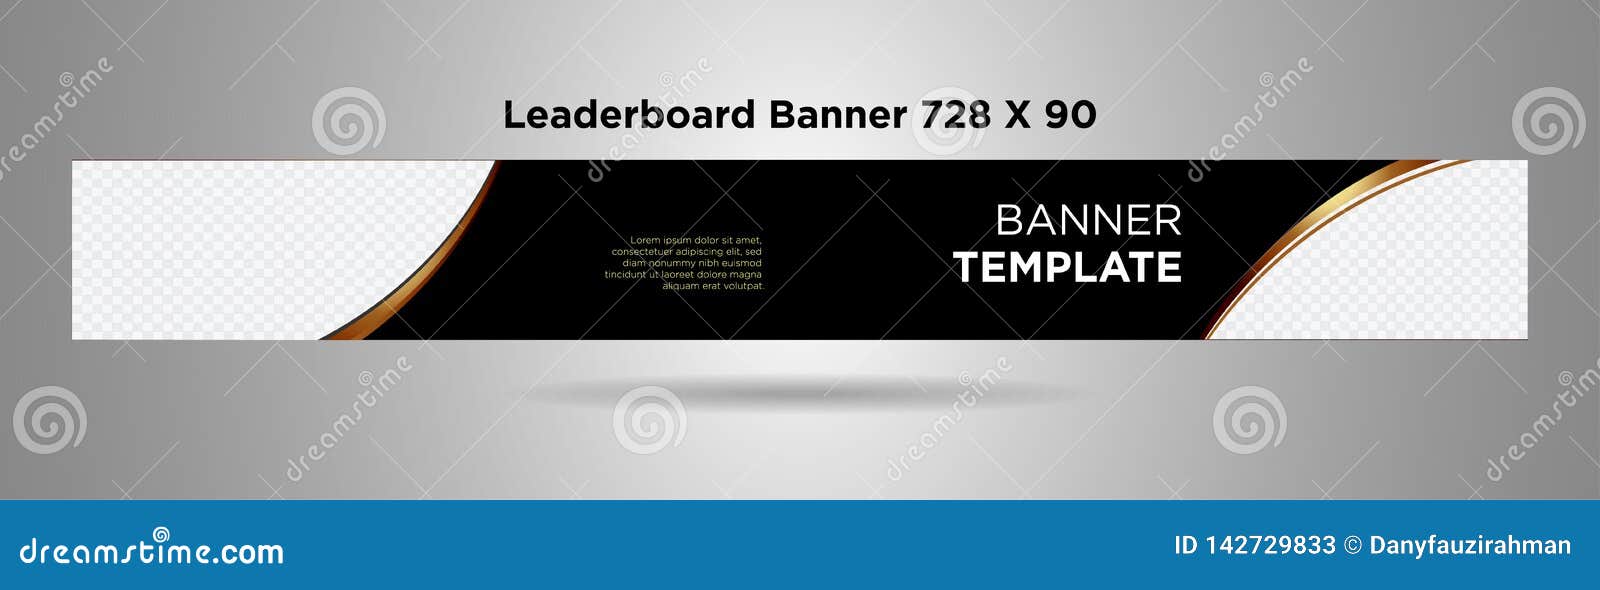 Leaderboard Banner 728x90 Black Gold Simple Design Vector 04 Stock Vector Illustration Of Gold Internet 142729833